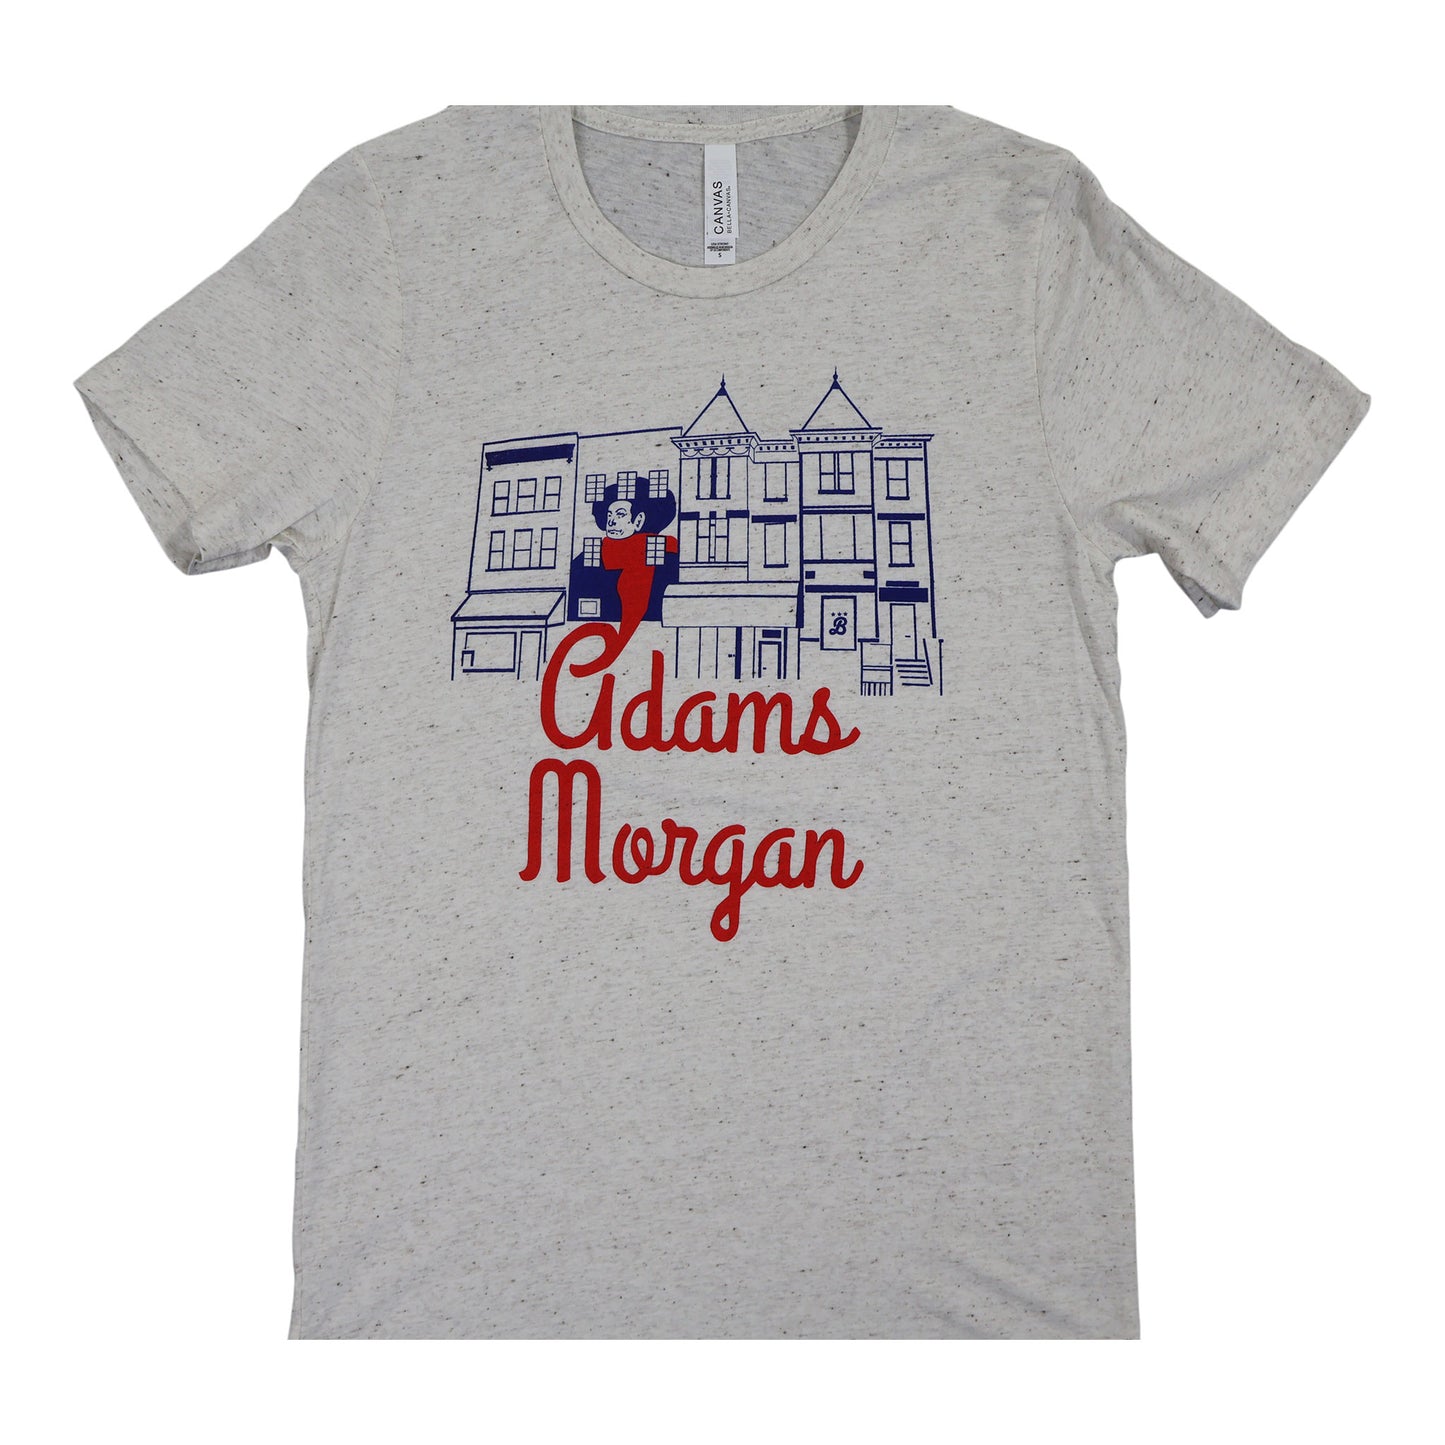 Unisex "Adams Morgan" Oatmeal Triblend shirt